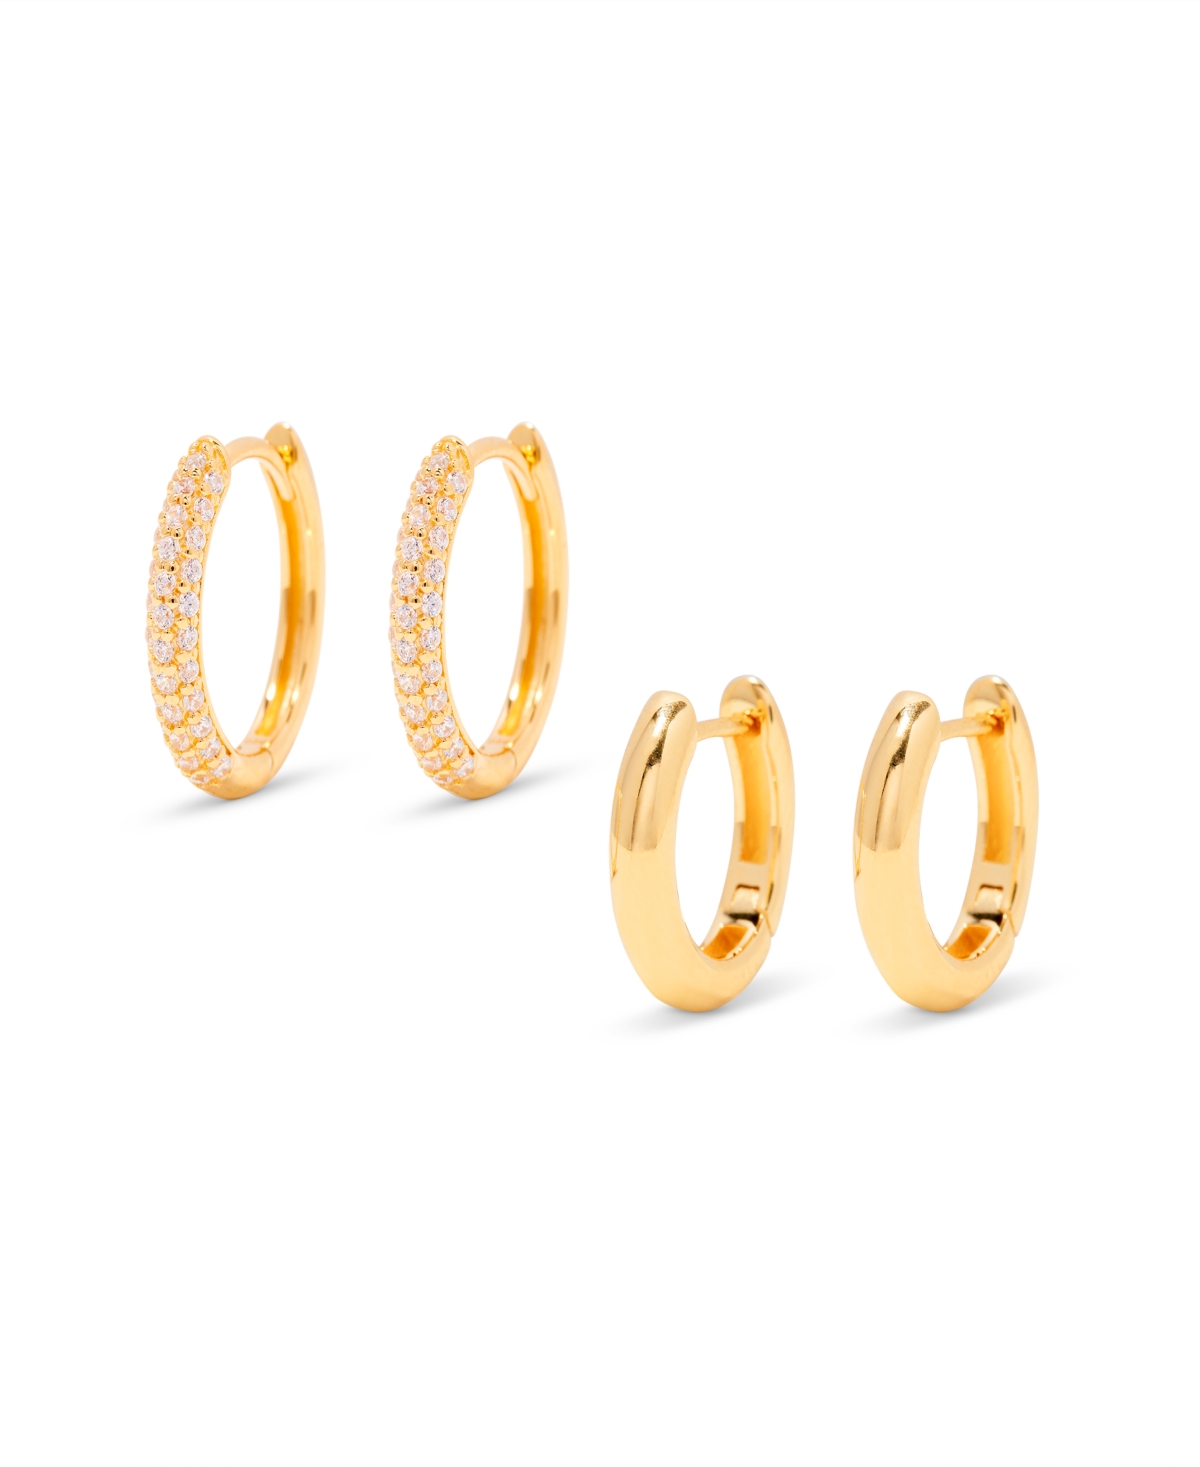 "14k Gold" Cecile Cubic Zirconia Earring Set, 4 Piece - Gold Vermeil